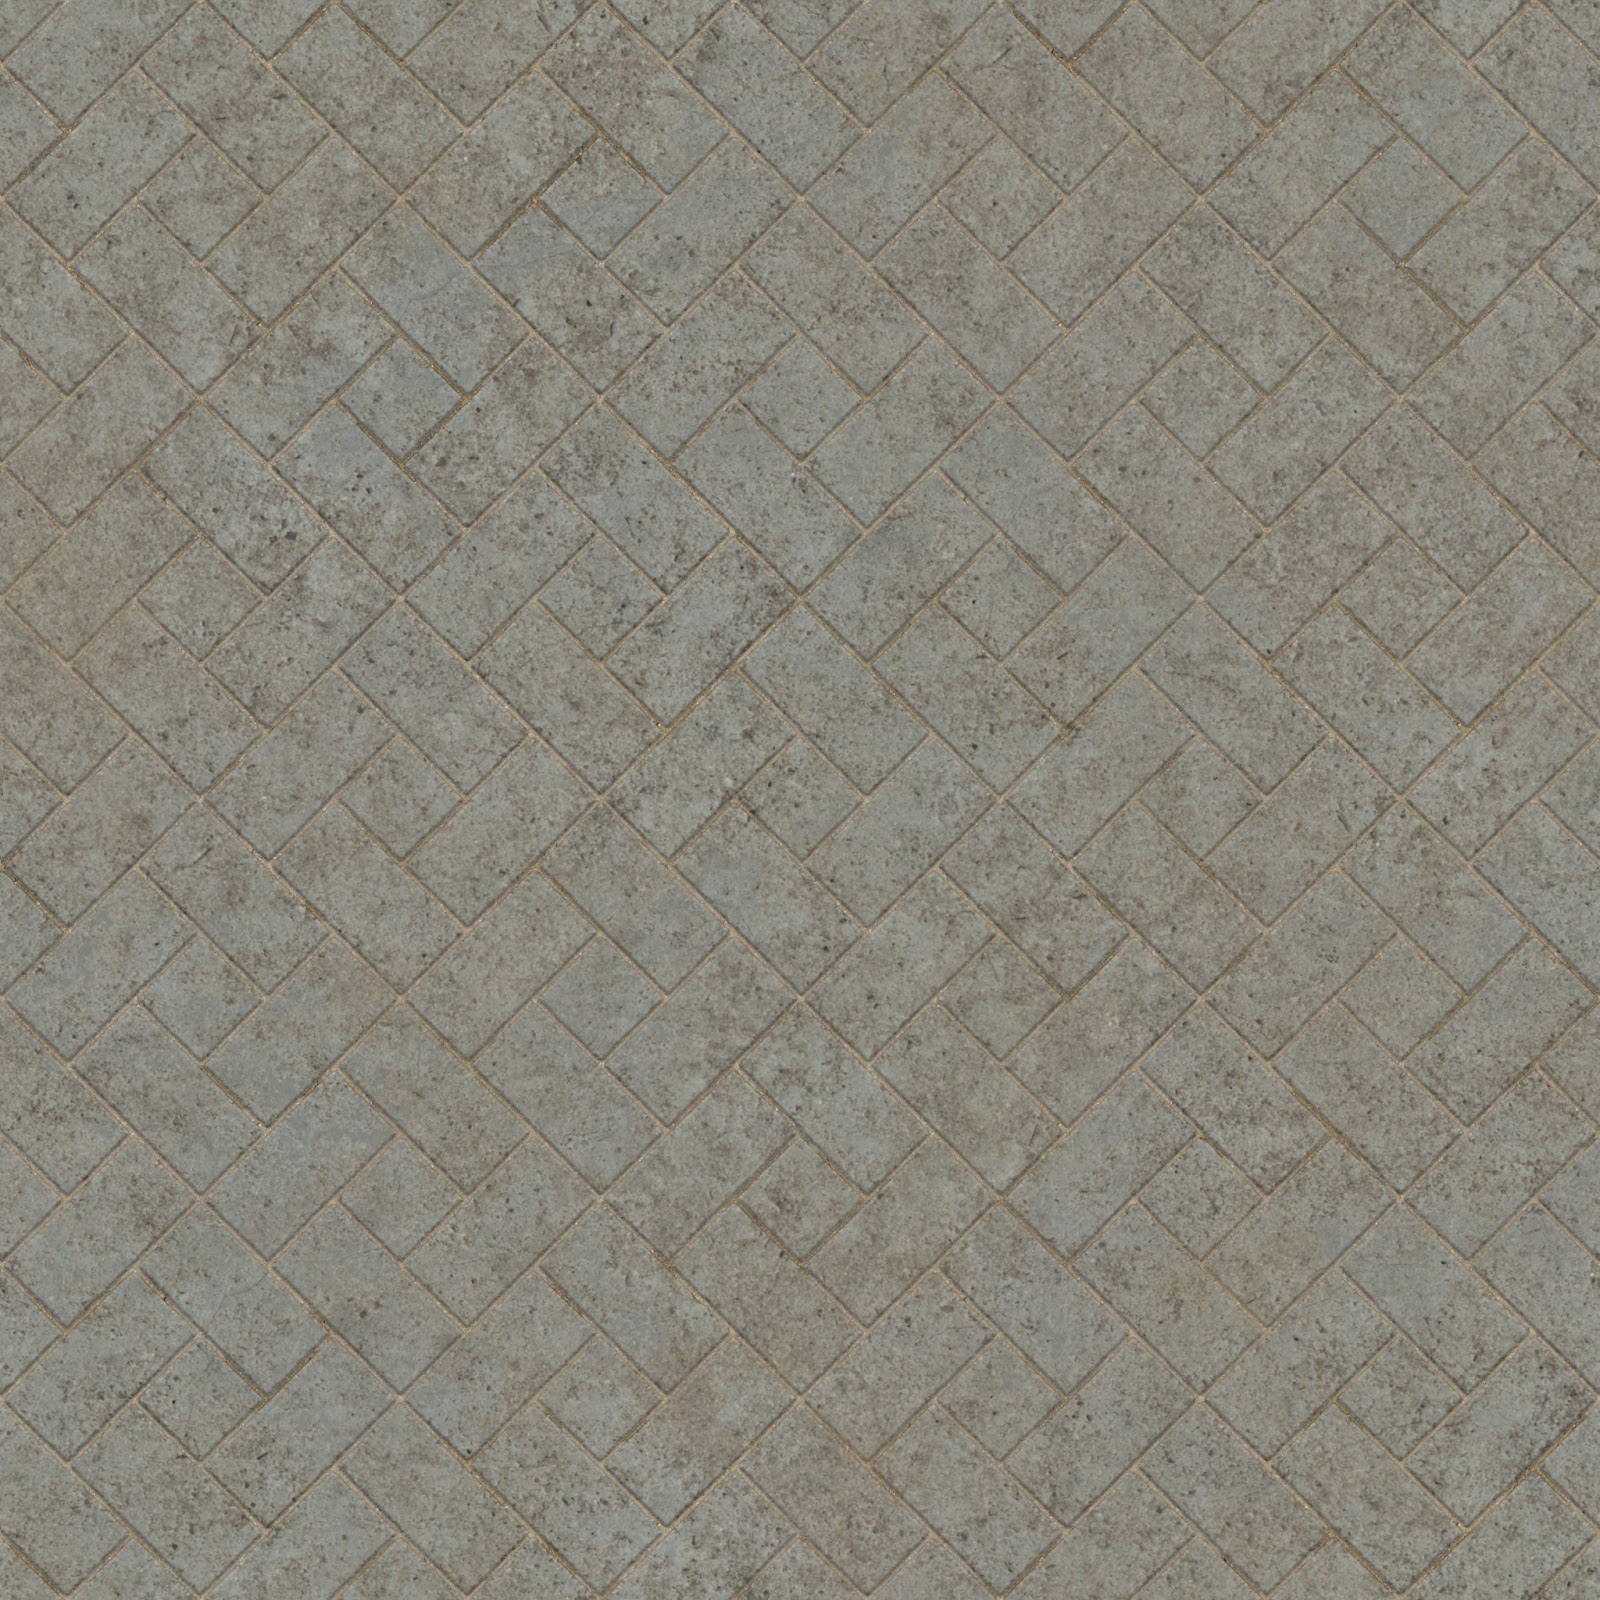 High Resolution Textures Brick Pavement Diamond Tiles Seamless Texture